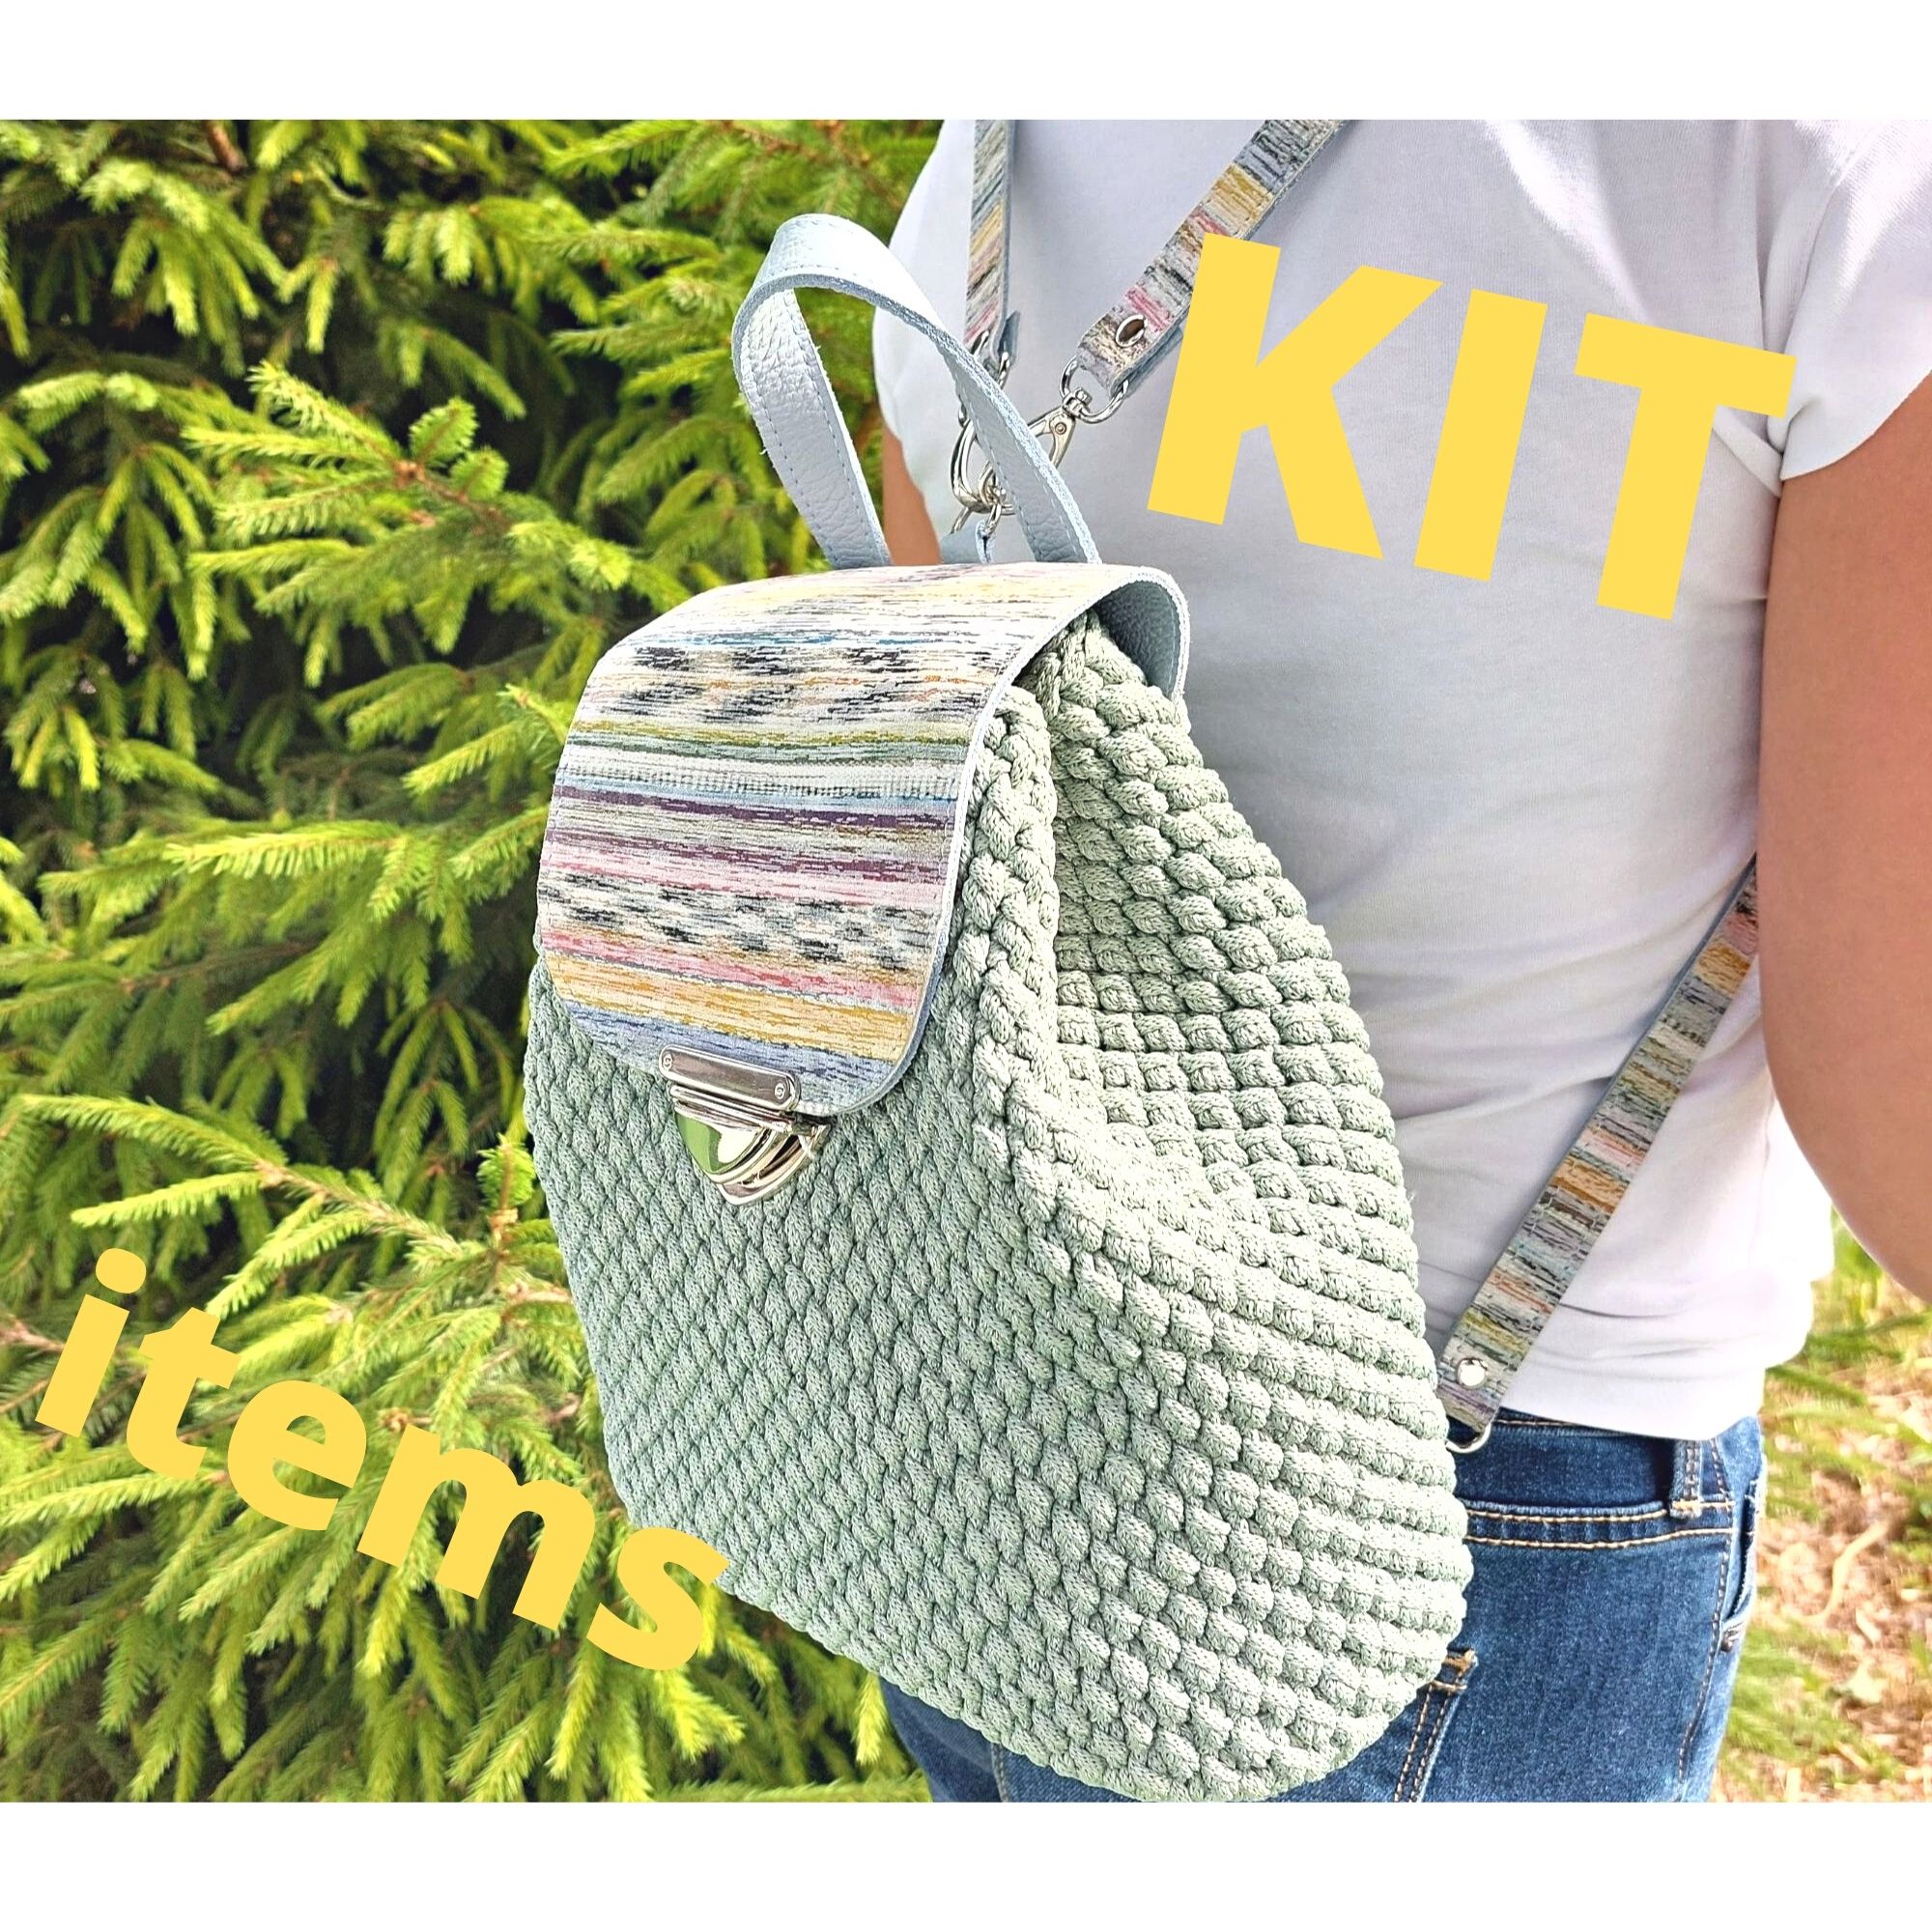 DIY Kit items genuiner leather for crochet backpack